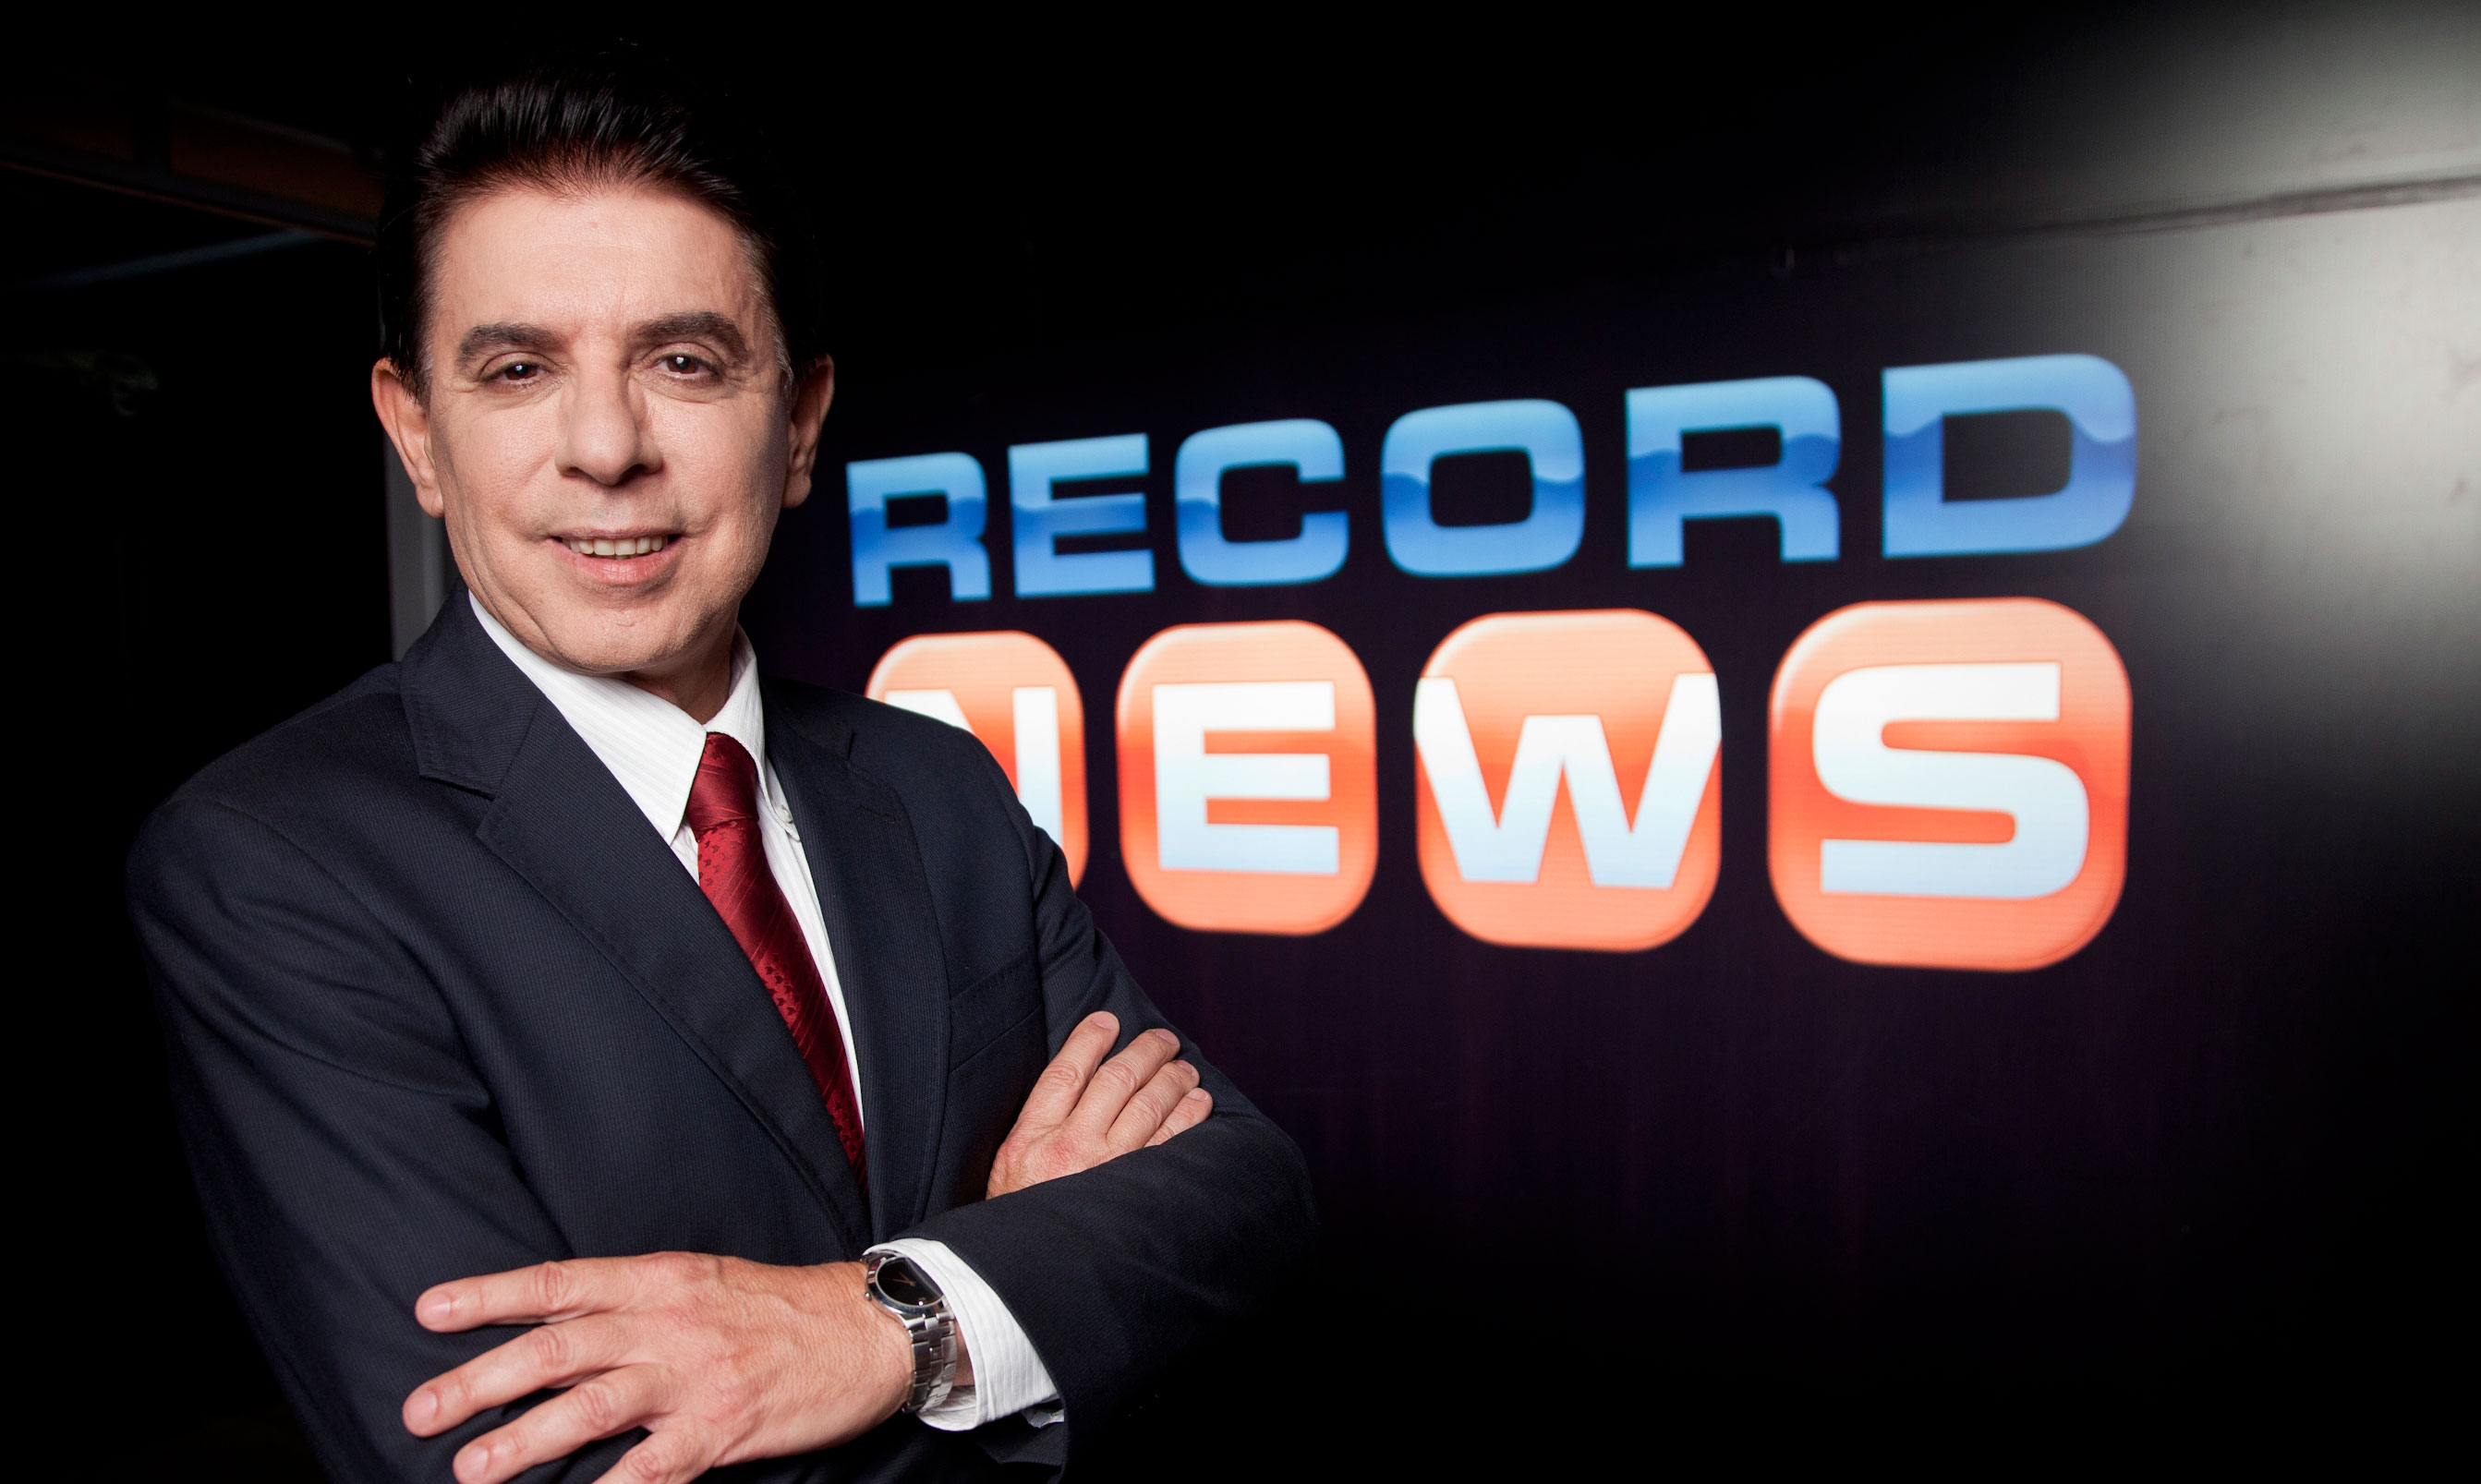 Heródoto Barbeiro Record News